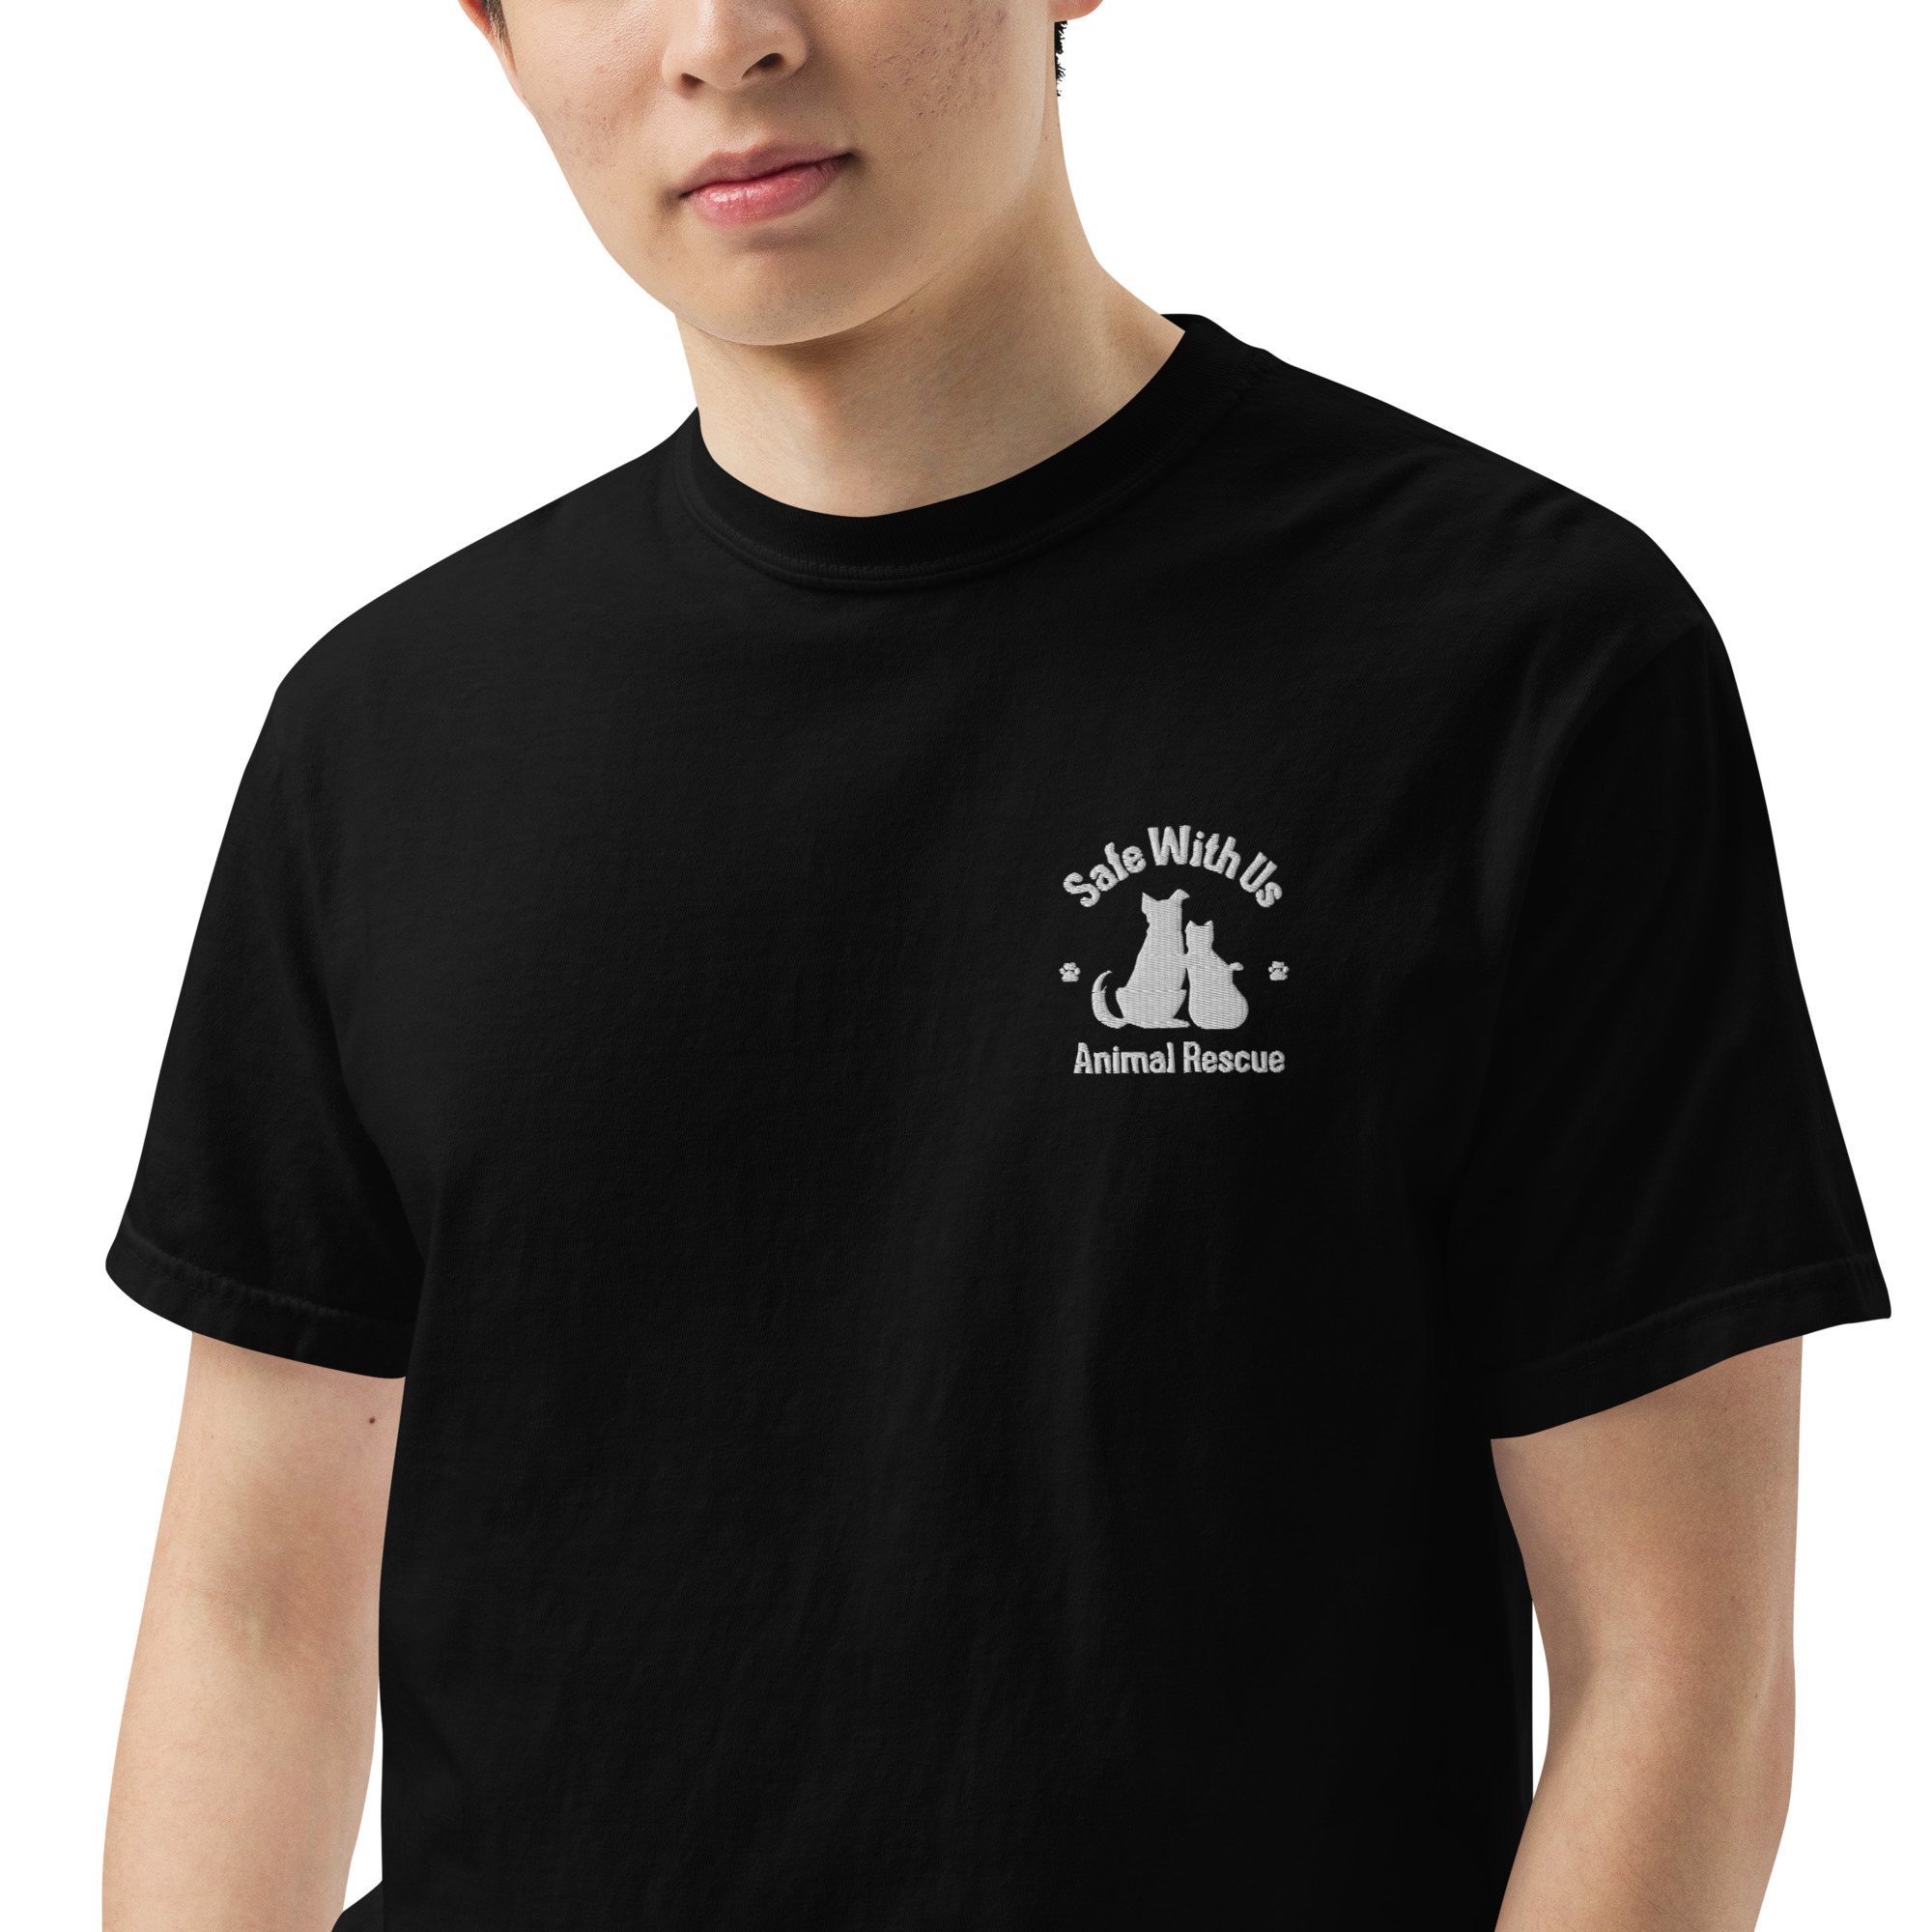 mens-garment-dyed-heavyweight-t-shirt-black-zoomed-in-3-6415fedc246c4-1.jpg